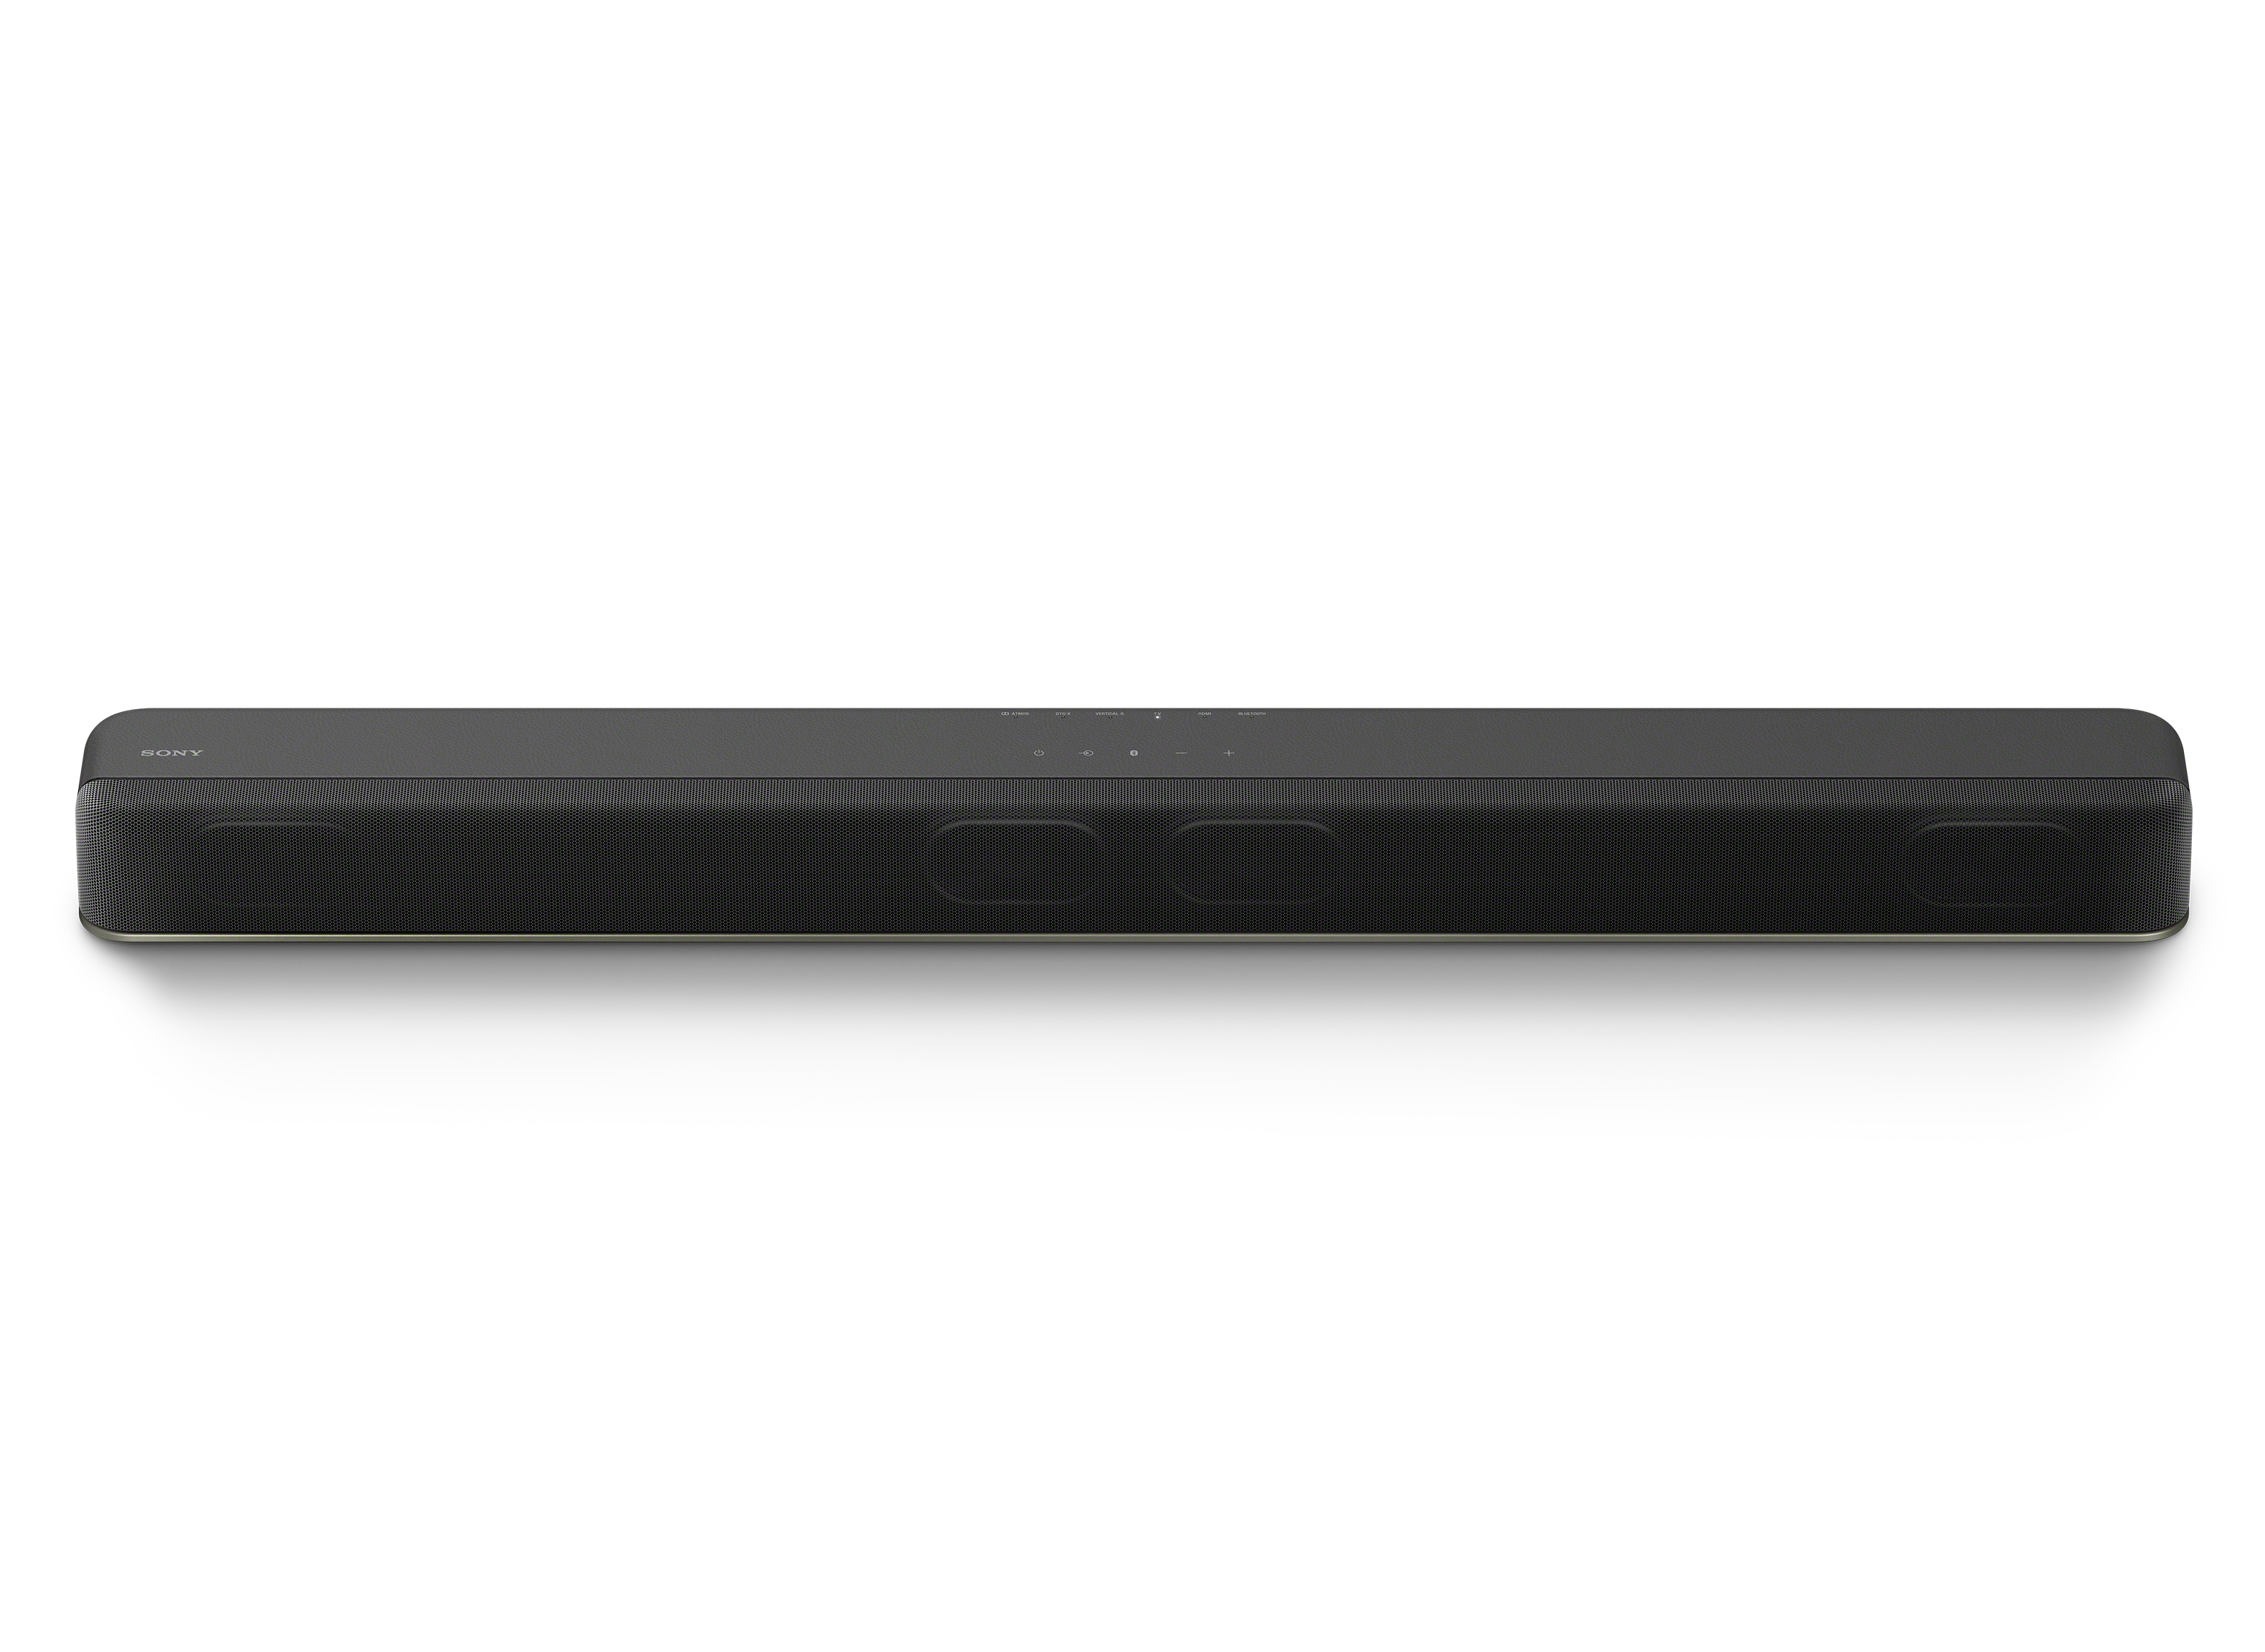 Sony HT-X8500 Soundbar Review - Consumer Reports